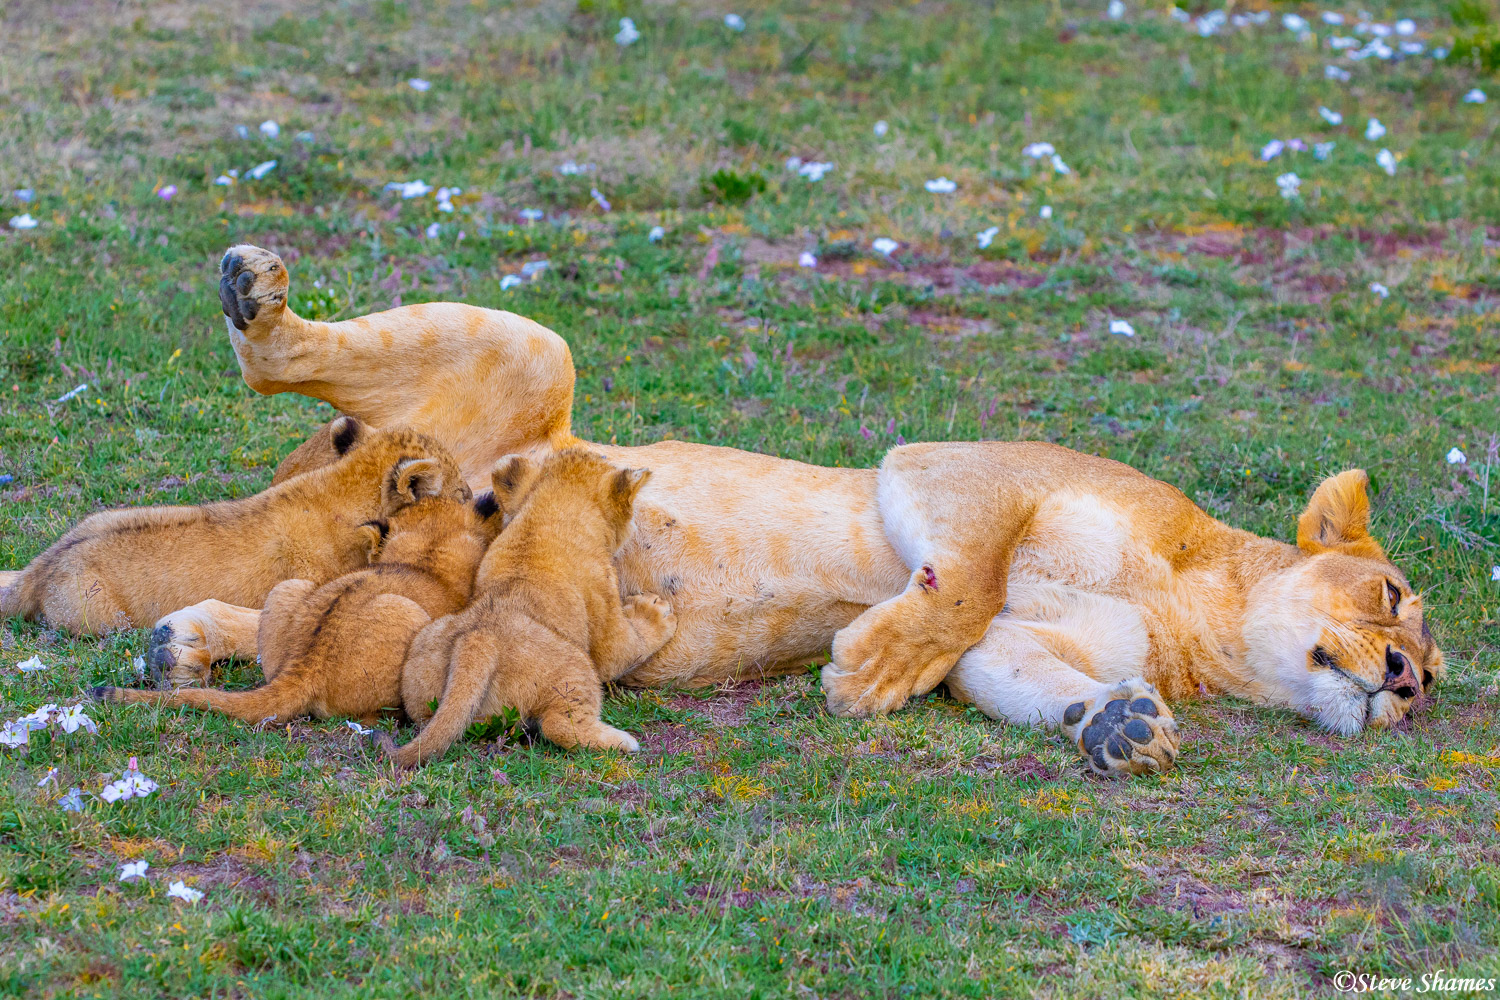 A common sight amongst a healthy pride, nursing lion cubs.